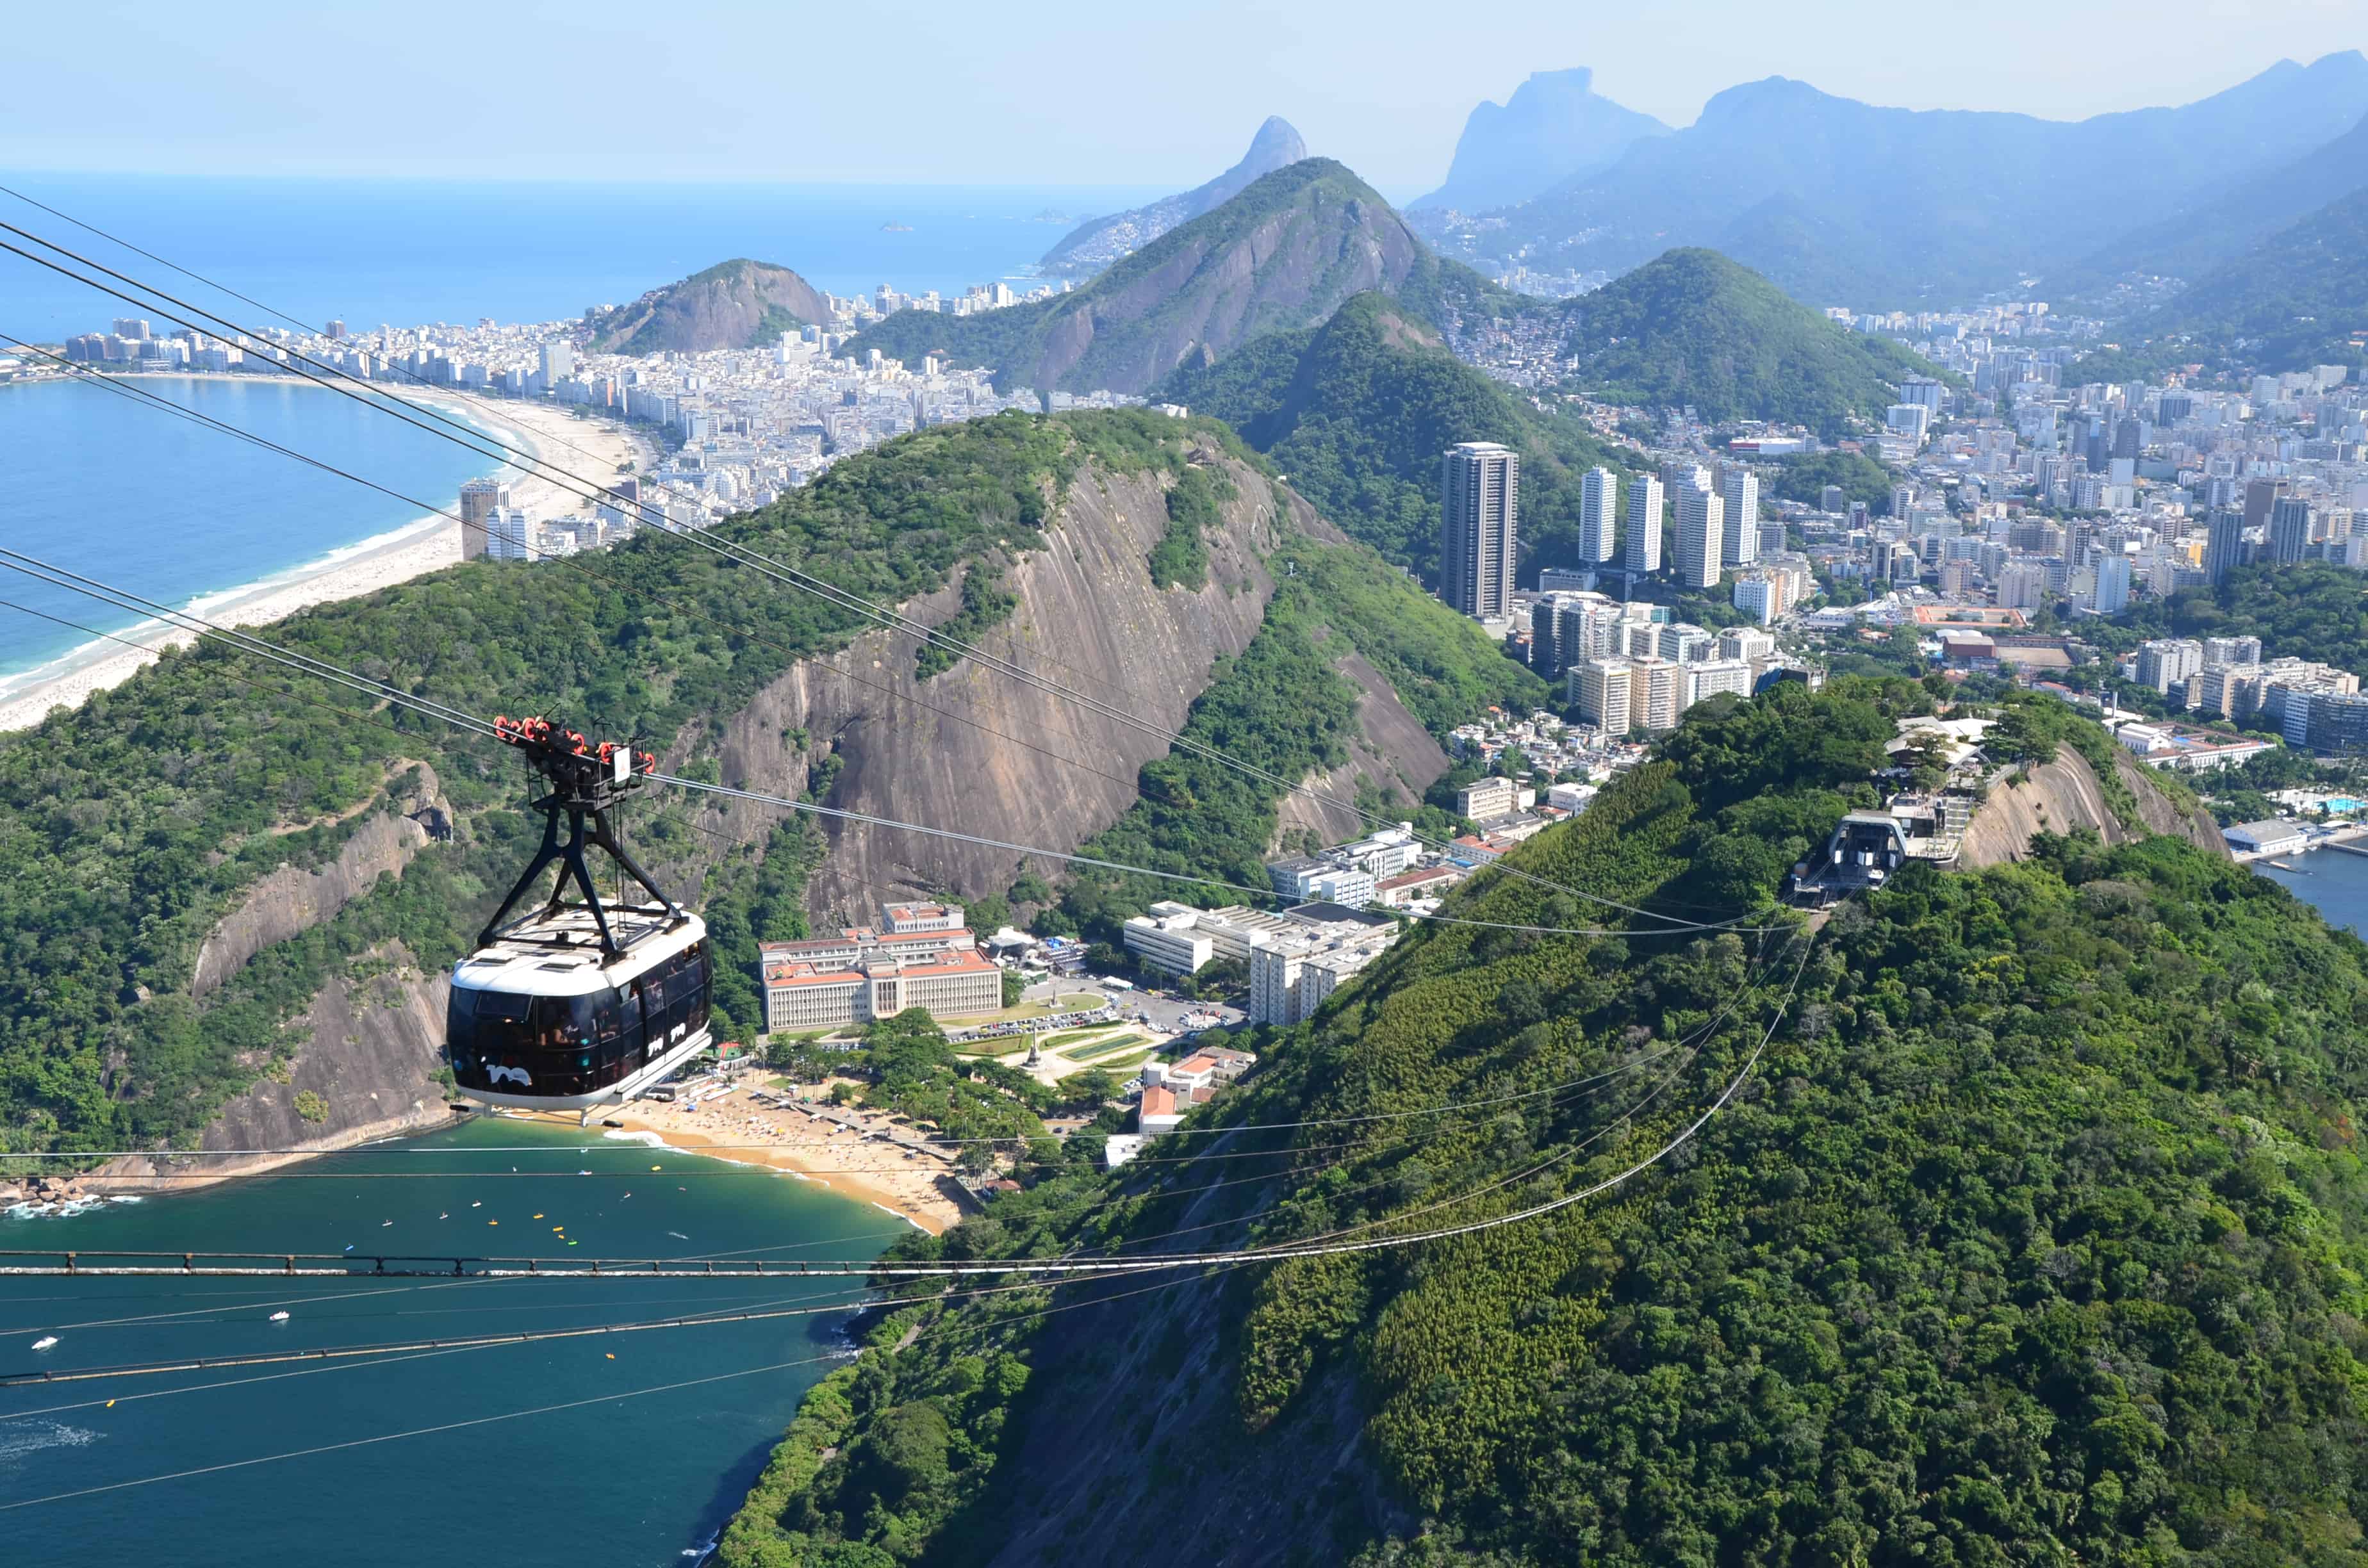 Cable car from Morro da Urca in Rio de Janeiro, Brazil